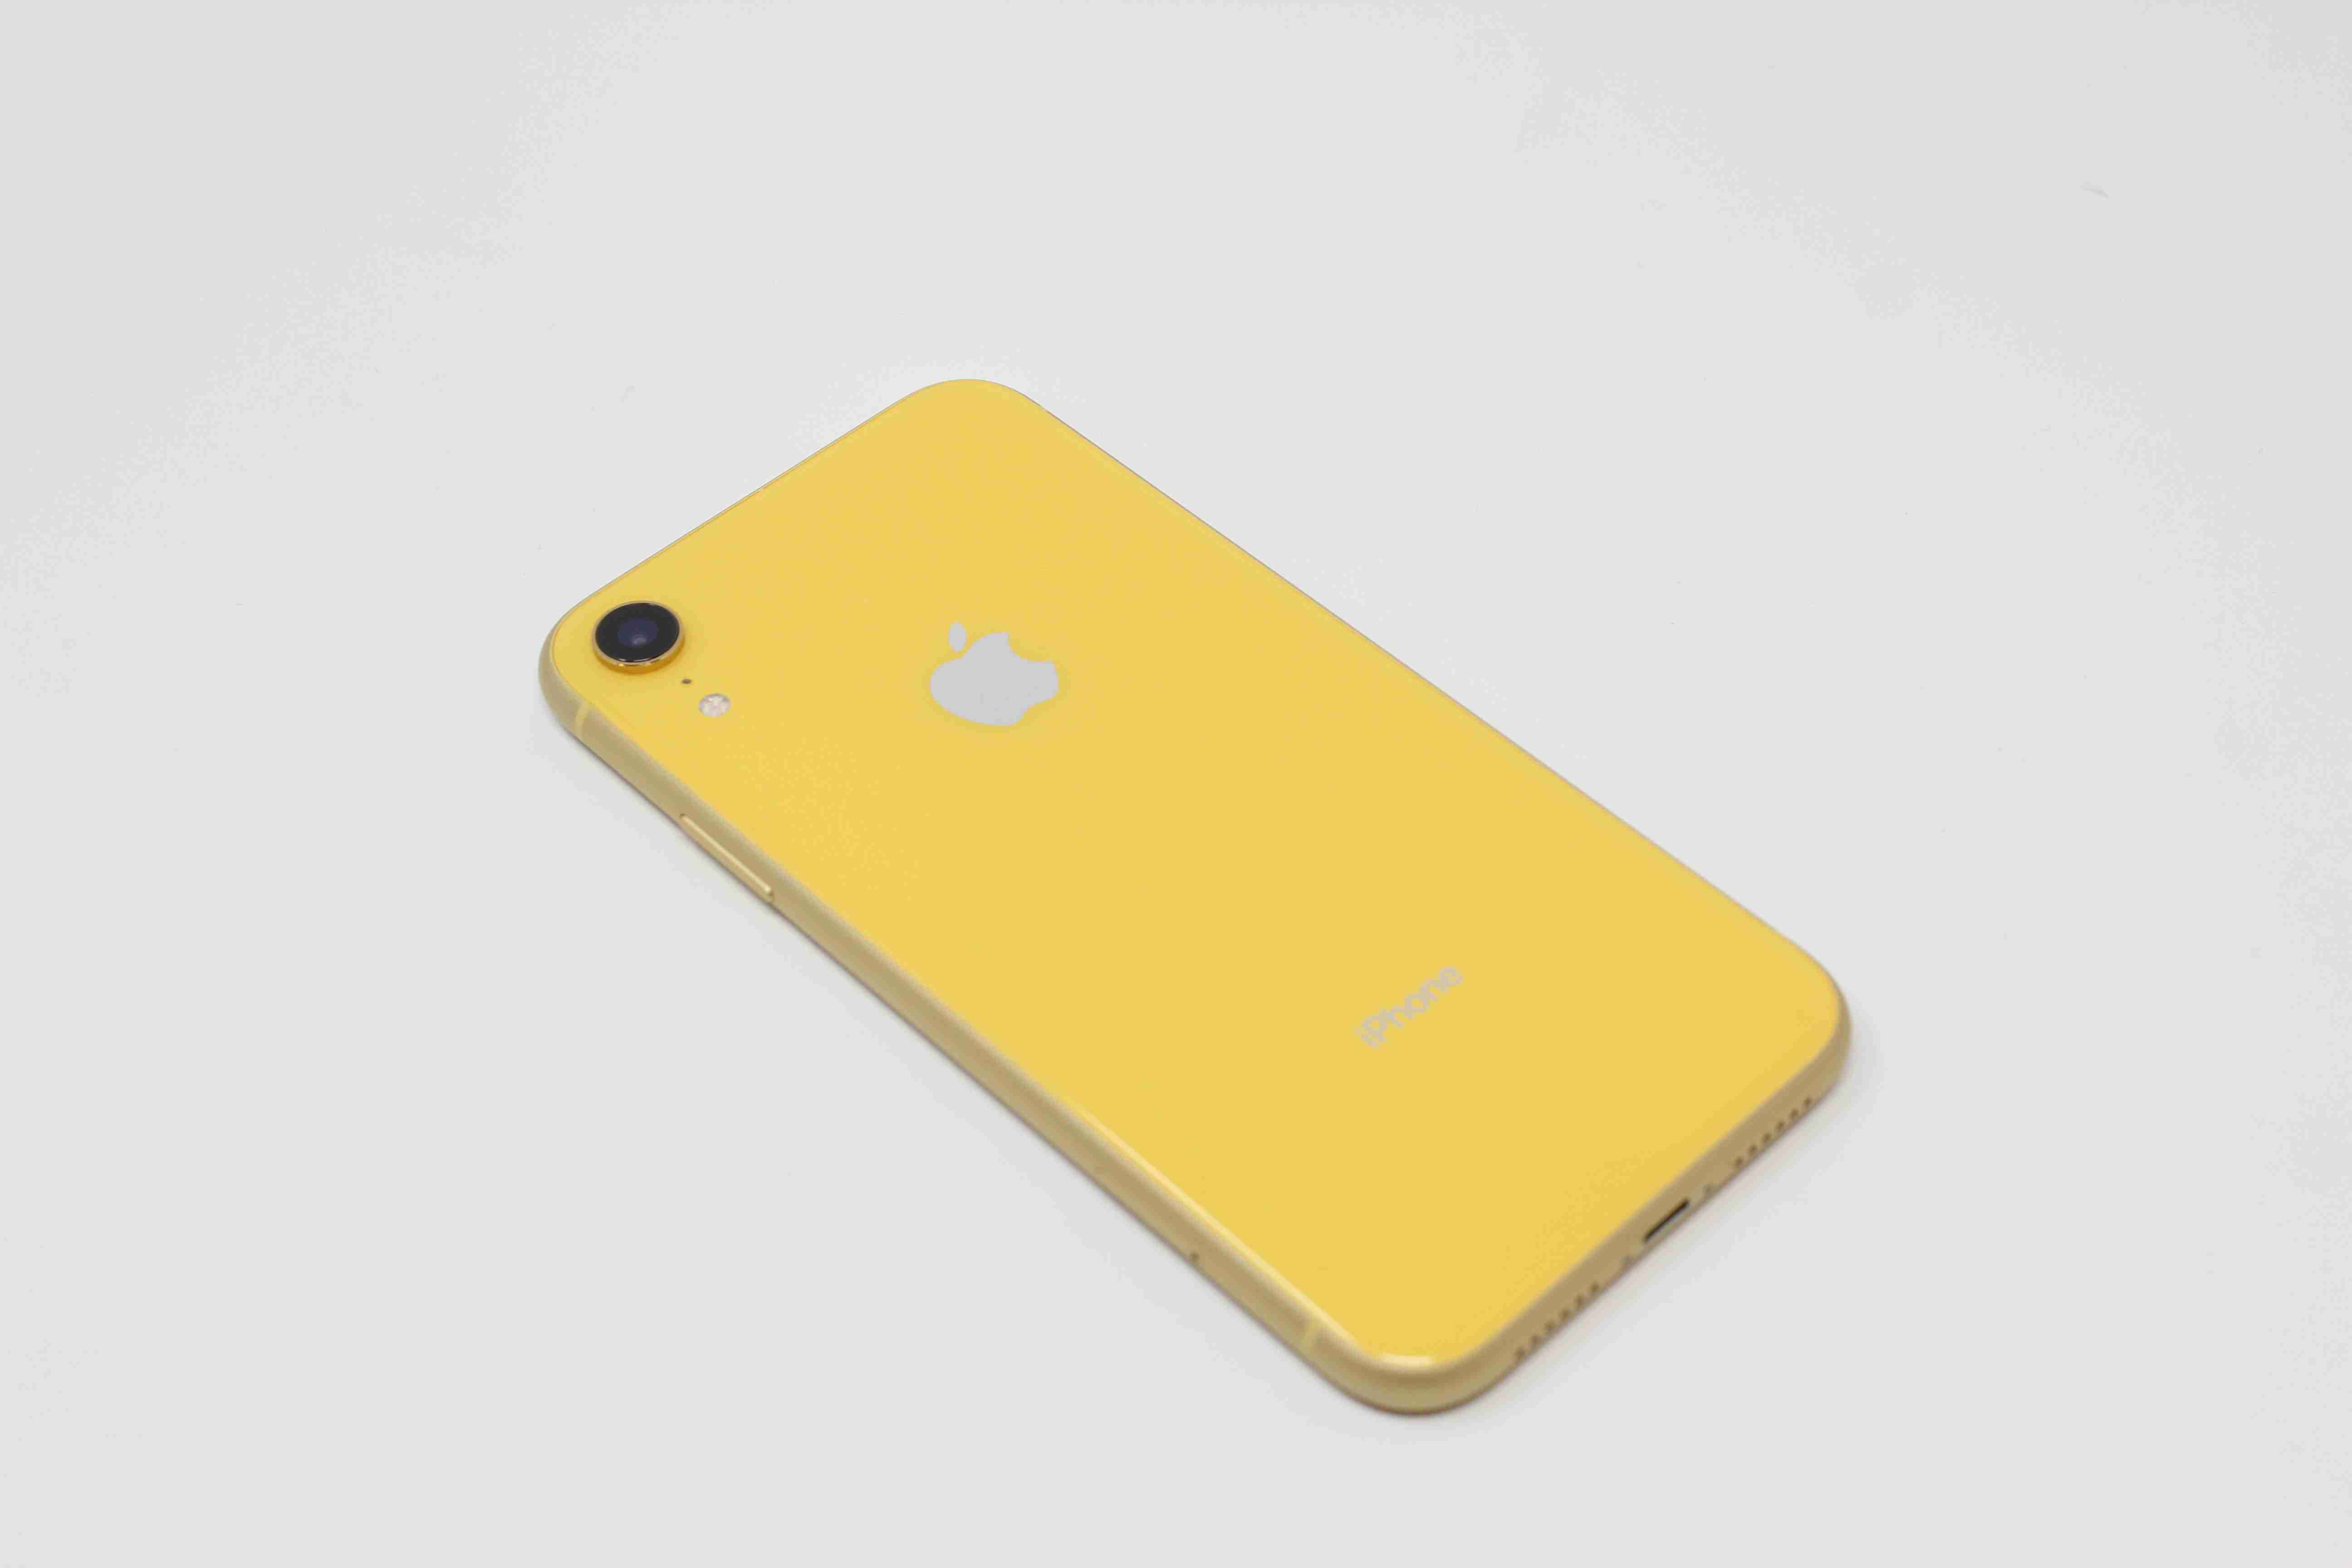 iPhone XR 128GB Yellow - Unlocked For Sale | 08027606UB